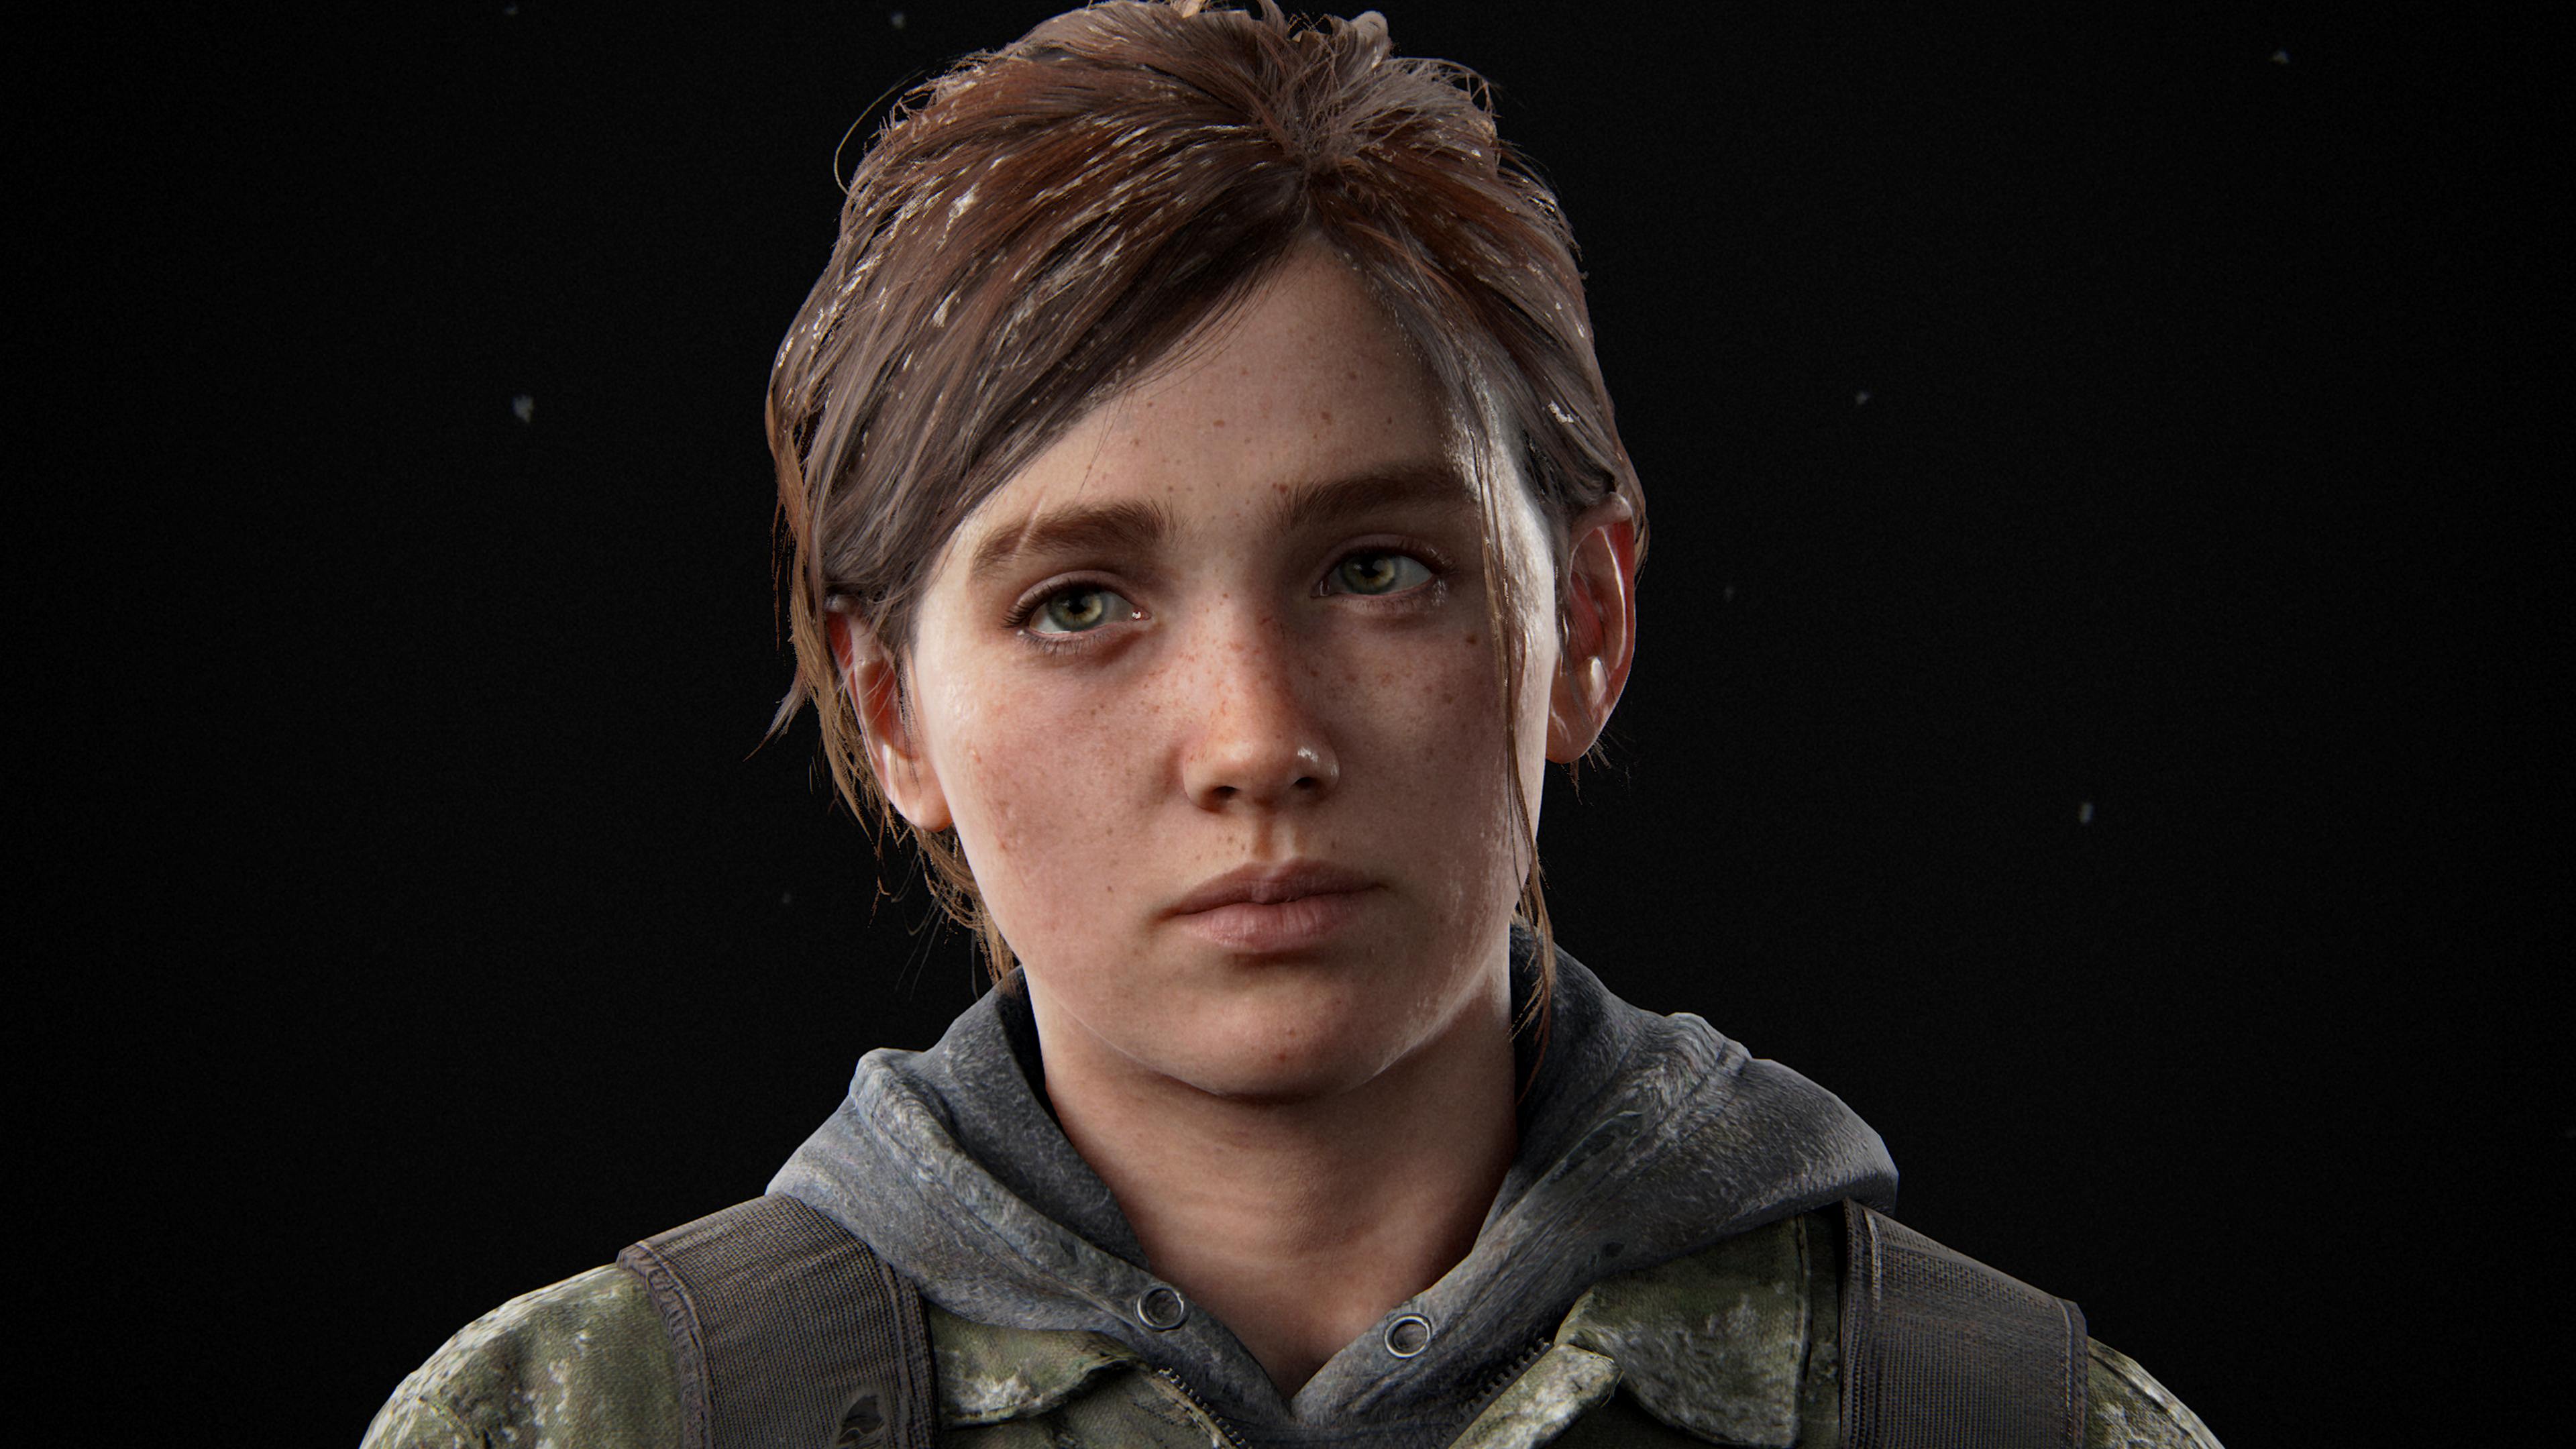 The Last of Us 2 Ellie by RPINr on DeviantArt